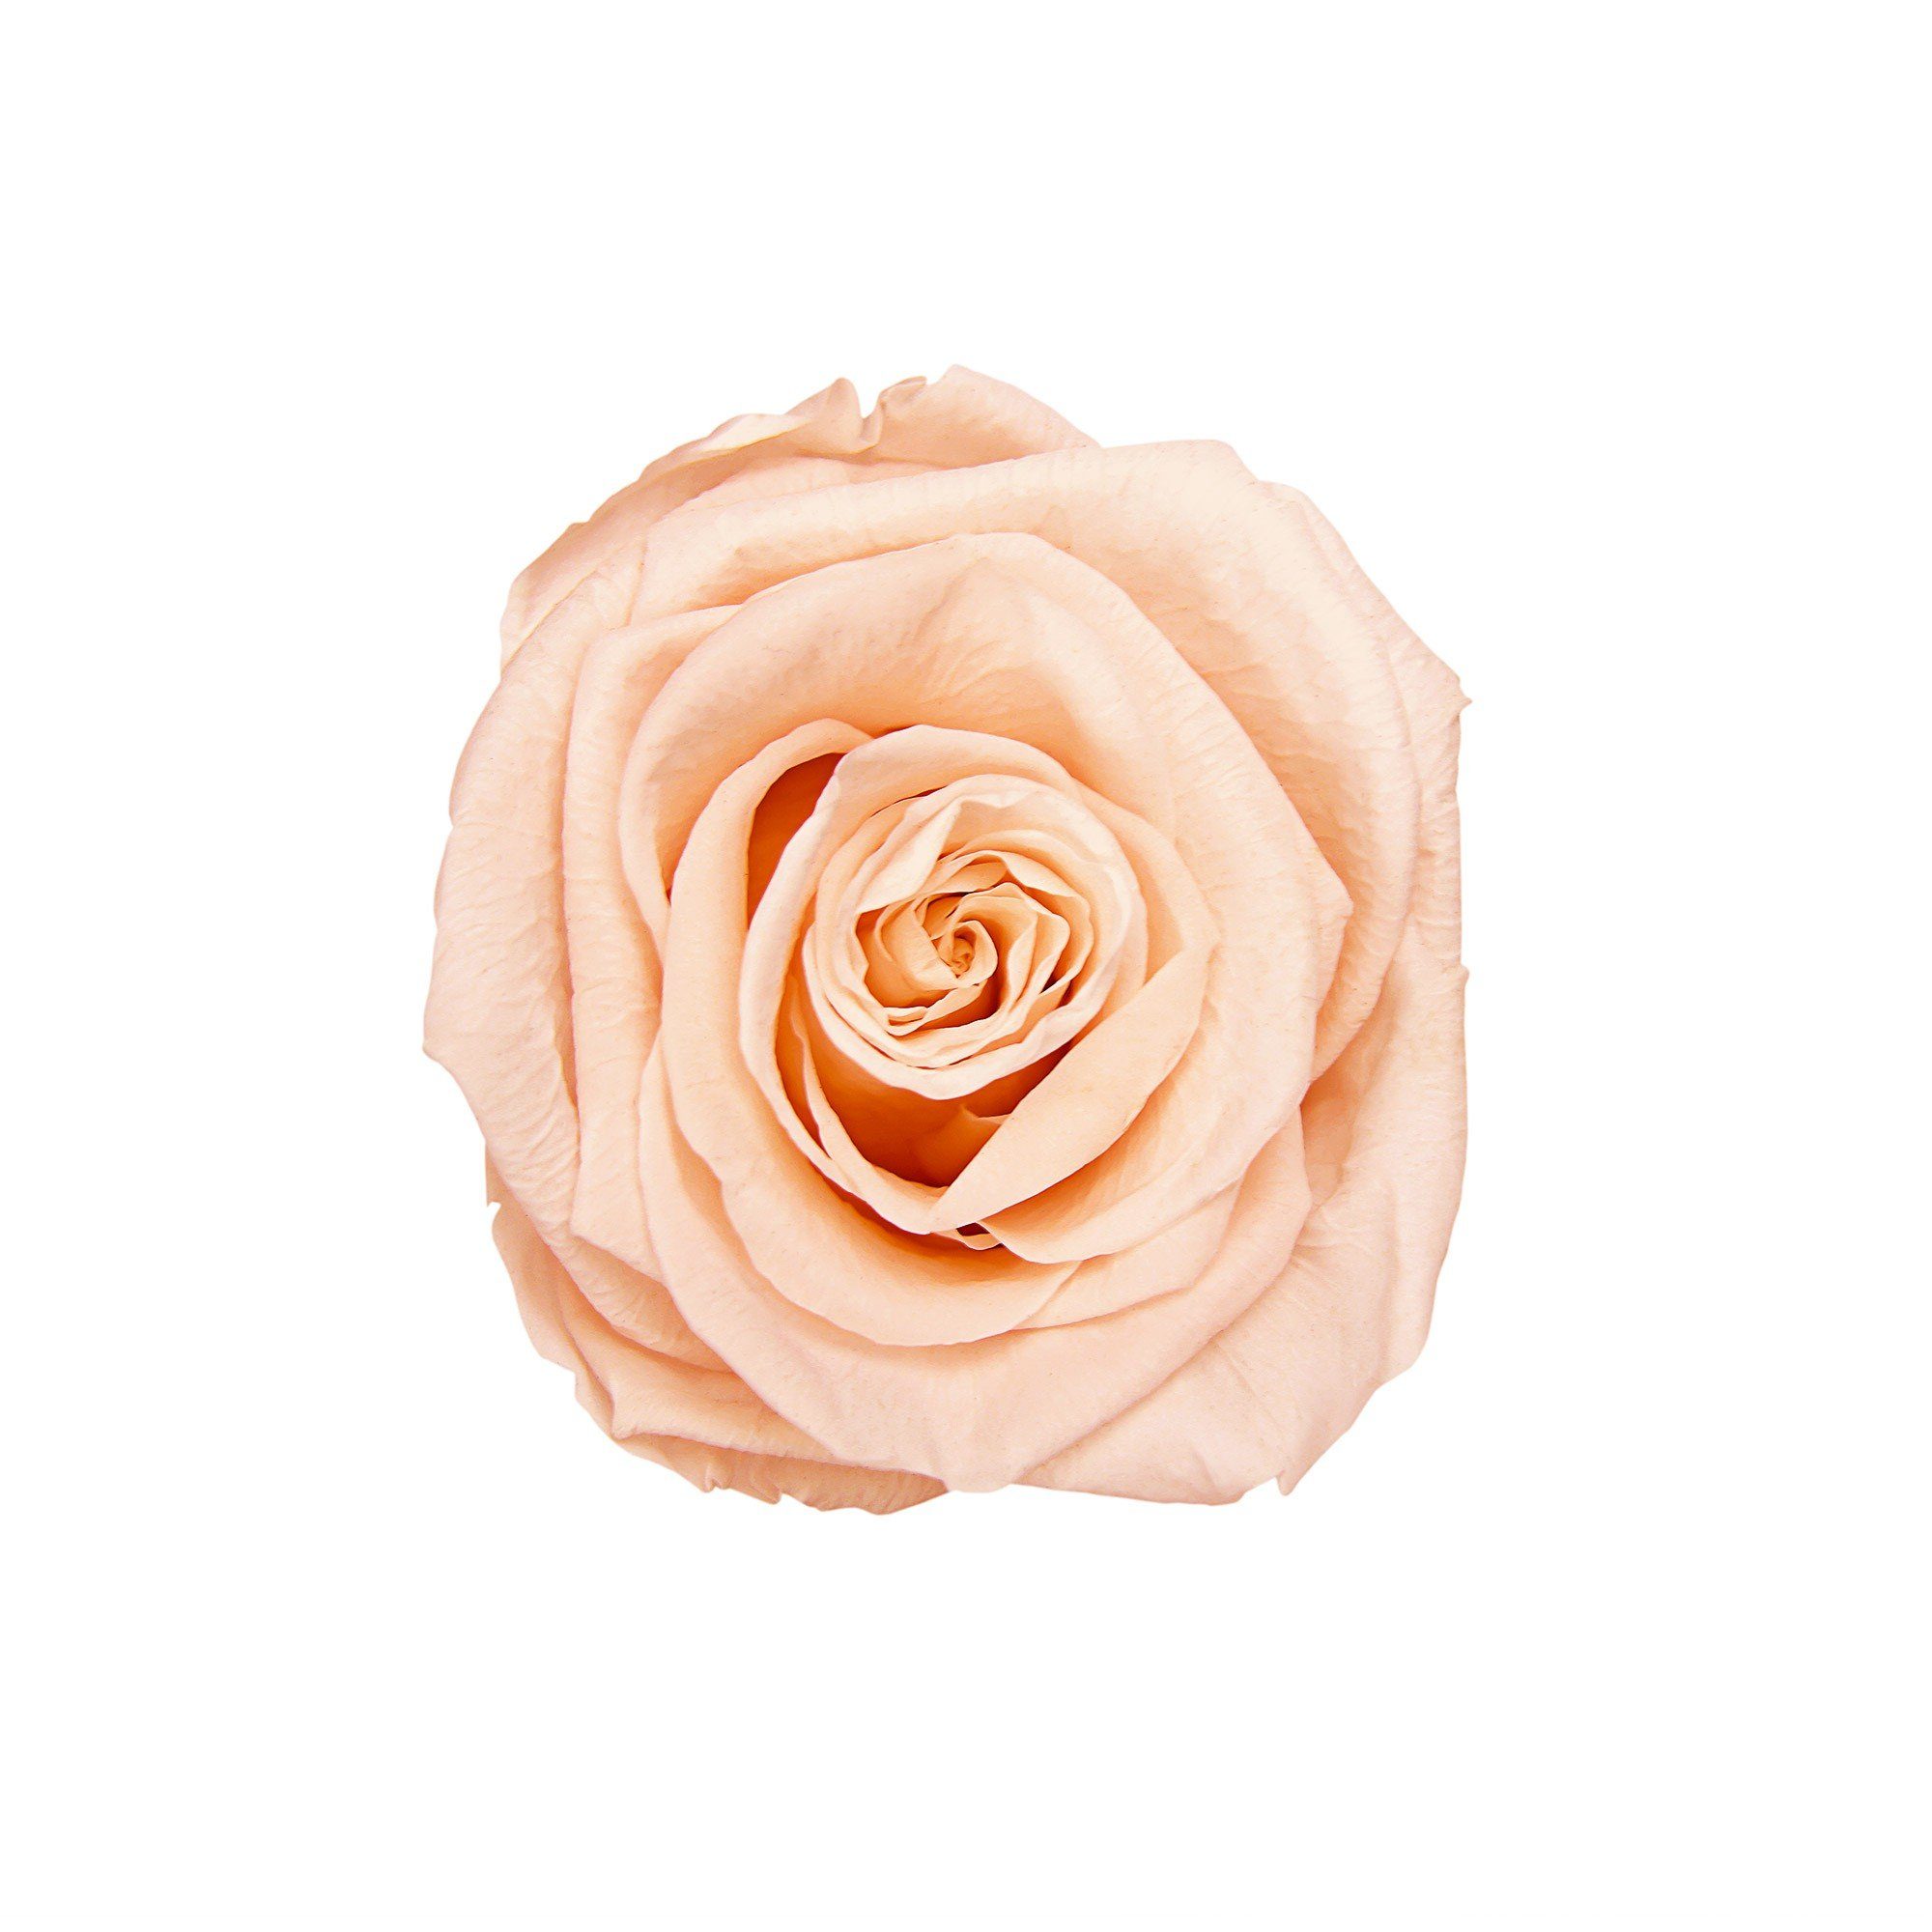 weiß I 9 duftende by Infinity Richter Rosenbox Blumen Rose, Flowers, 1er I Peach Holy Eckige cm Rose mit Jahre I Kunstblume Infinity Raul Echte, Höhe konservierte in haltbar 3